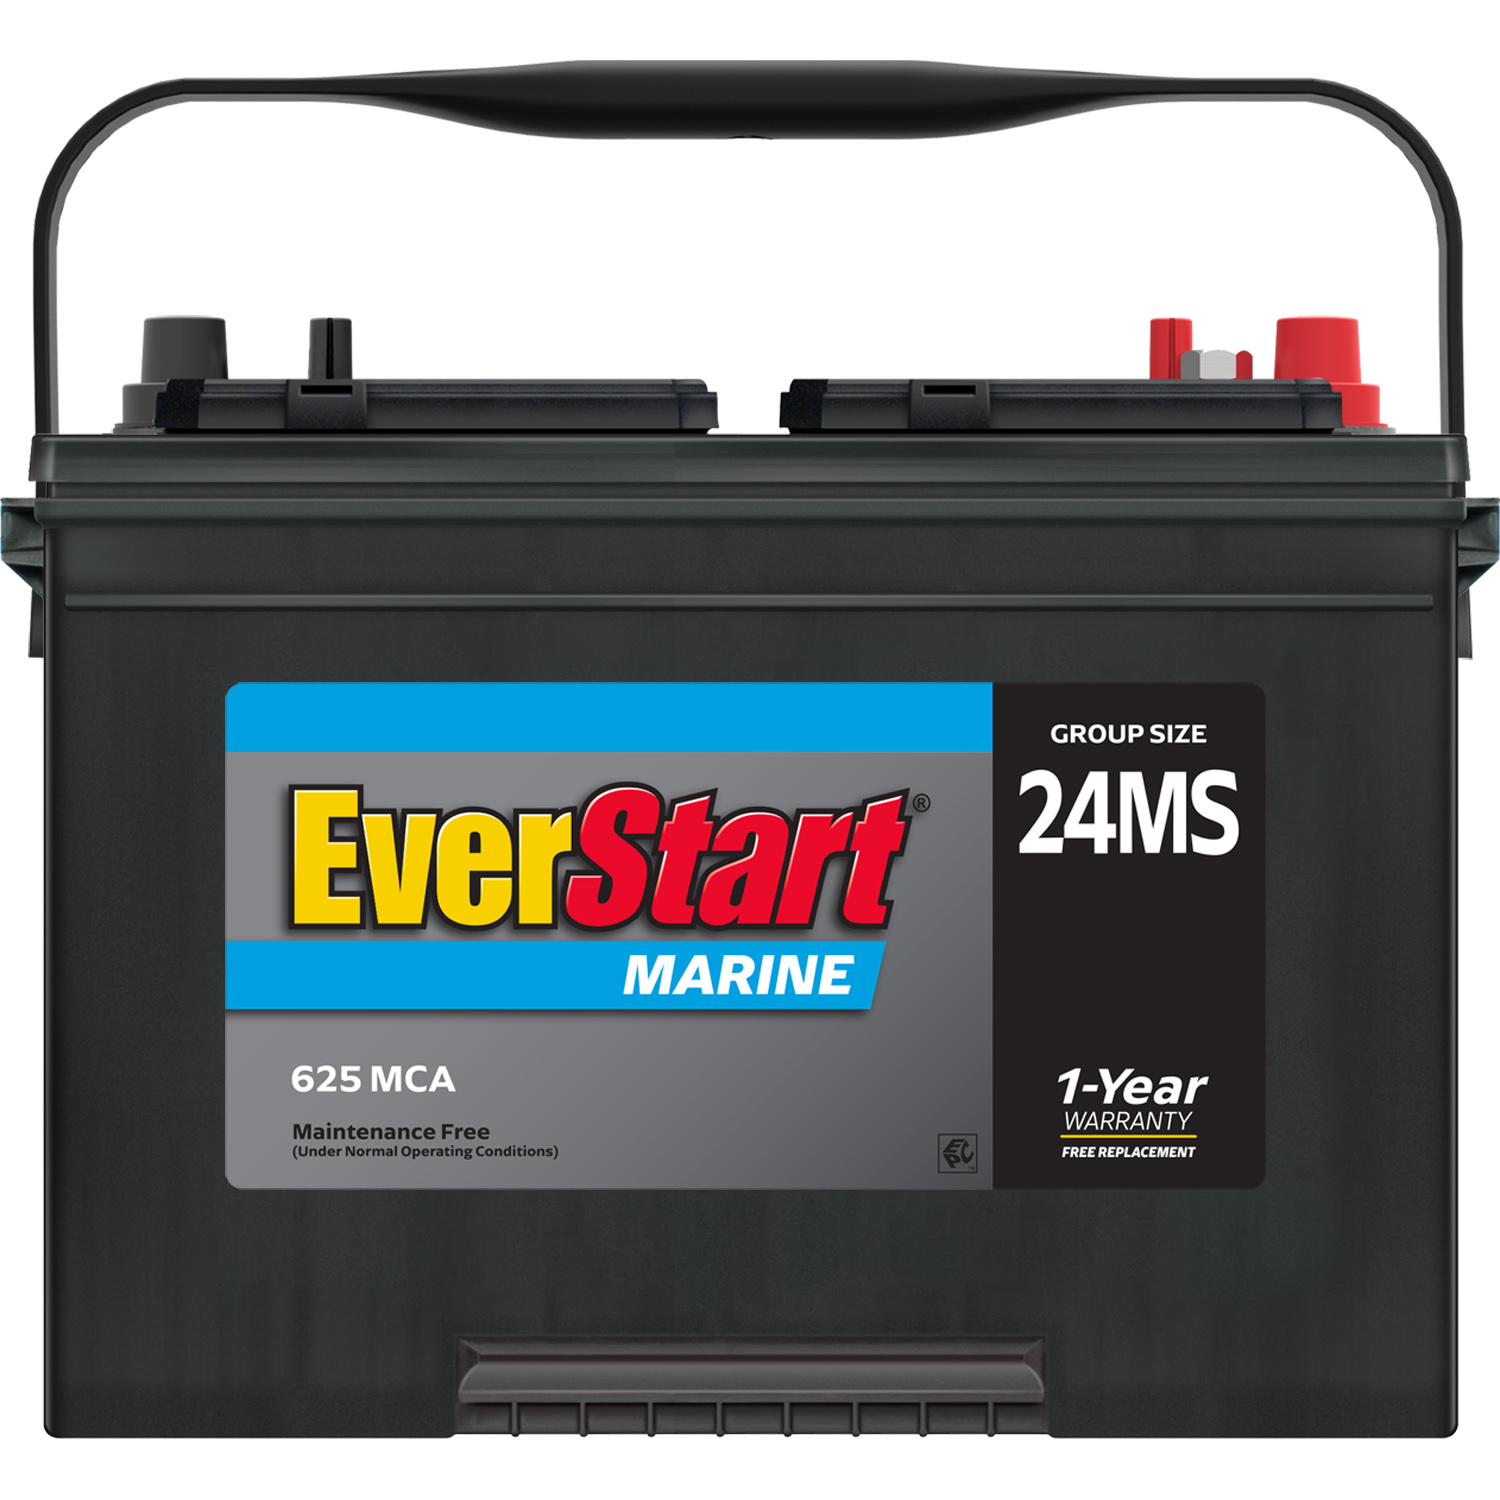 EverStart Lead Acid Marine Starting Battery, Group Size 24MS 12 Volt, 1000 MCA - image 4 of 9